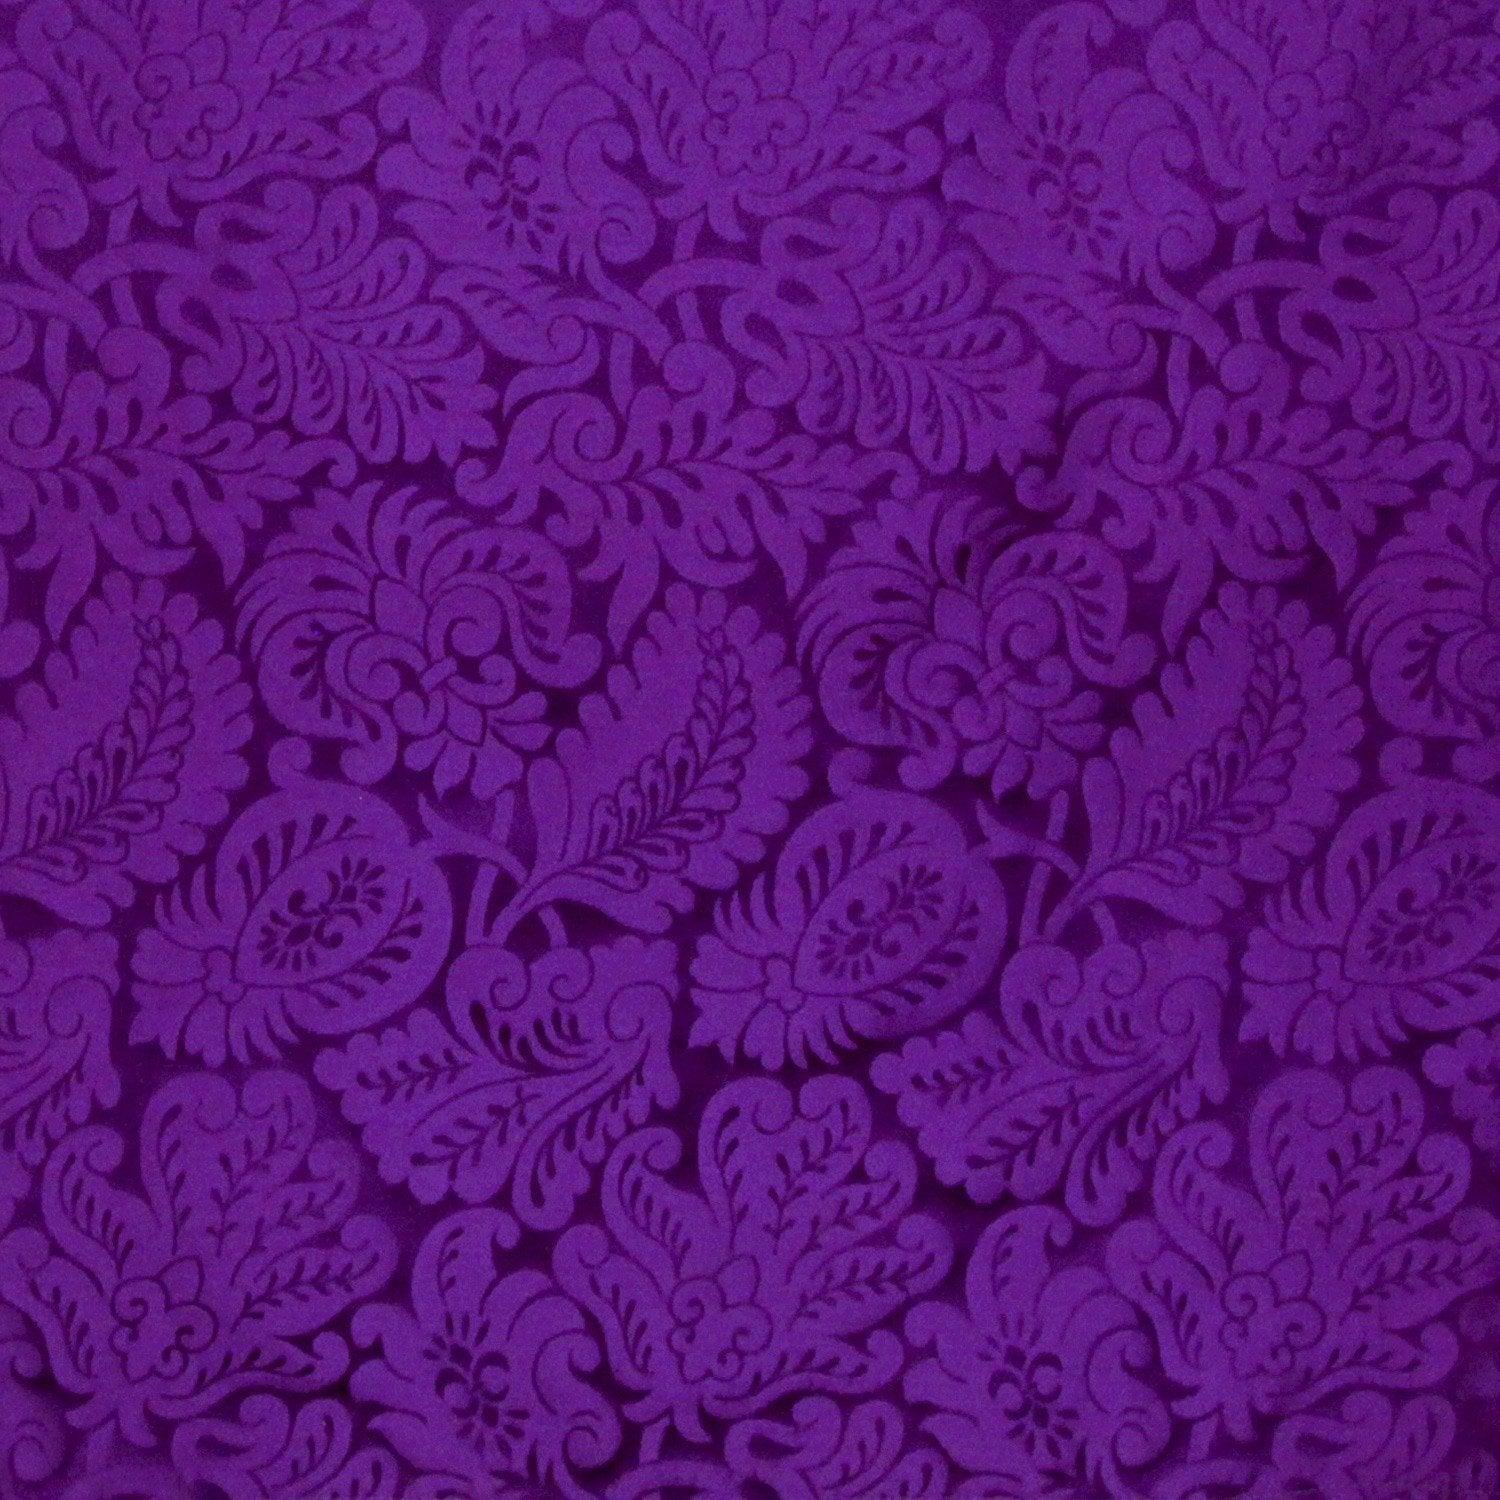 Holbein Silk Damask - Royal Purple - Watts & Co. (international)